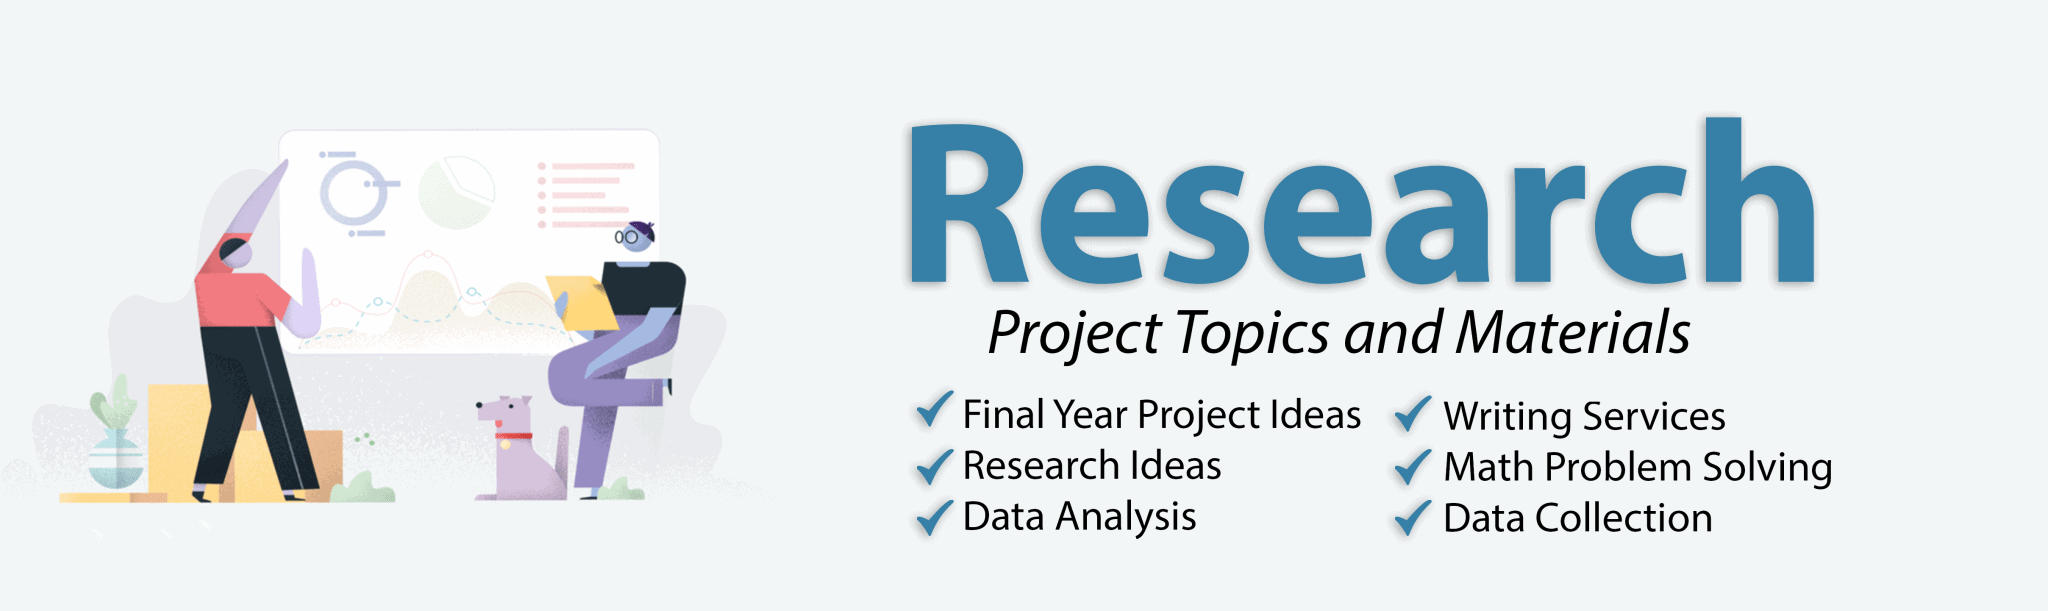 undergraduate research project topics